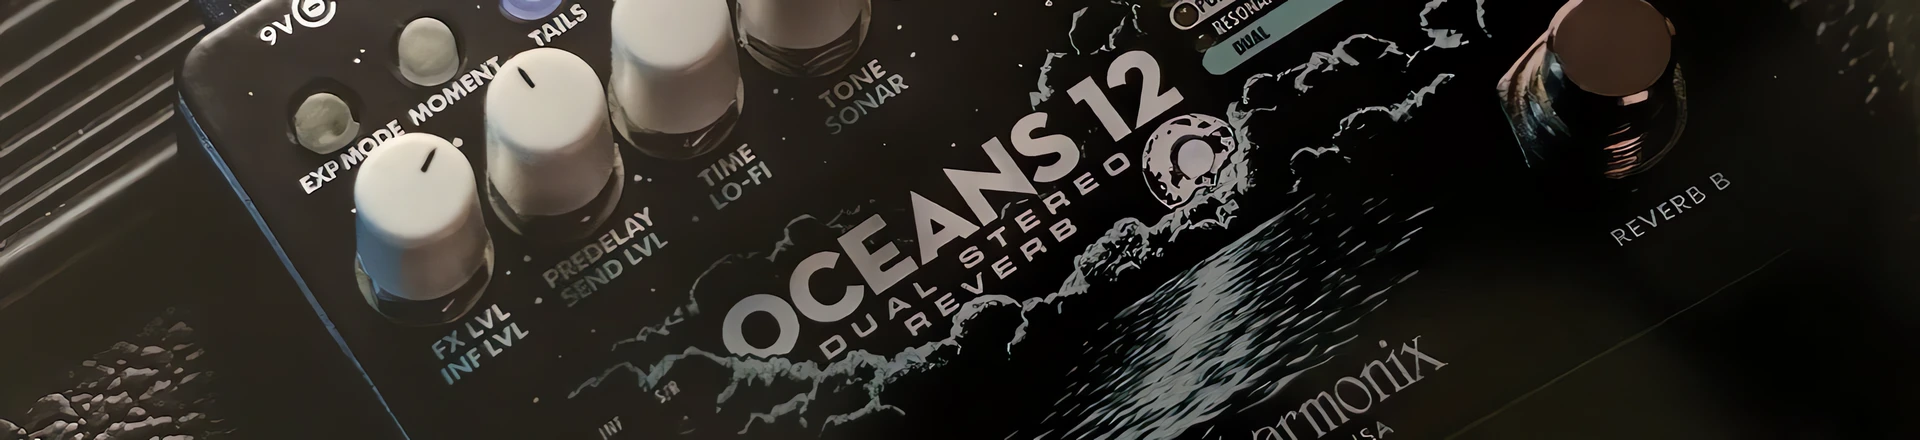 Oceans 12 - nowy reverb od Electro-Harmonix 